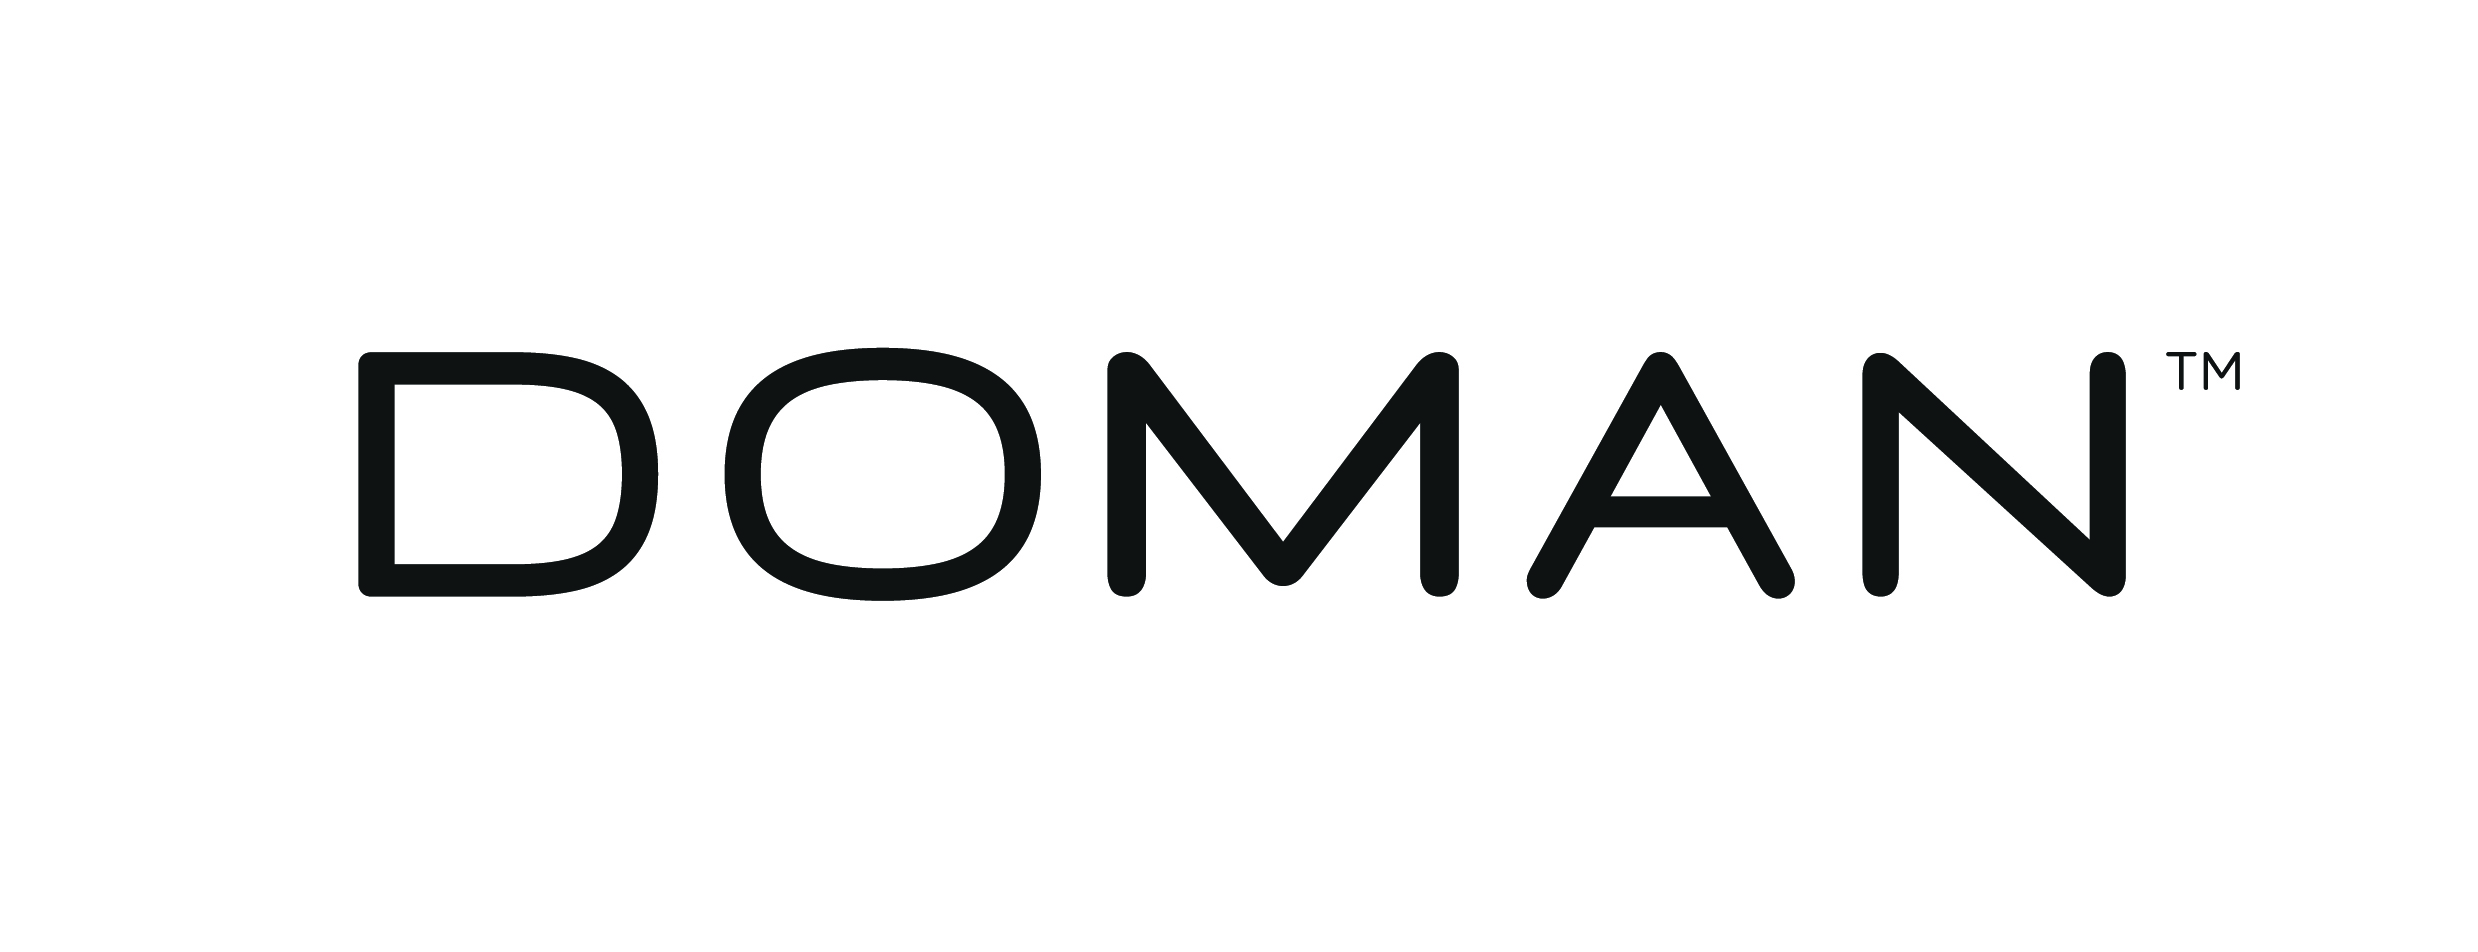 DOMAN_Logo_TM.jpg